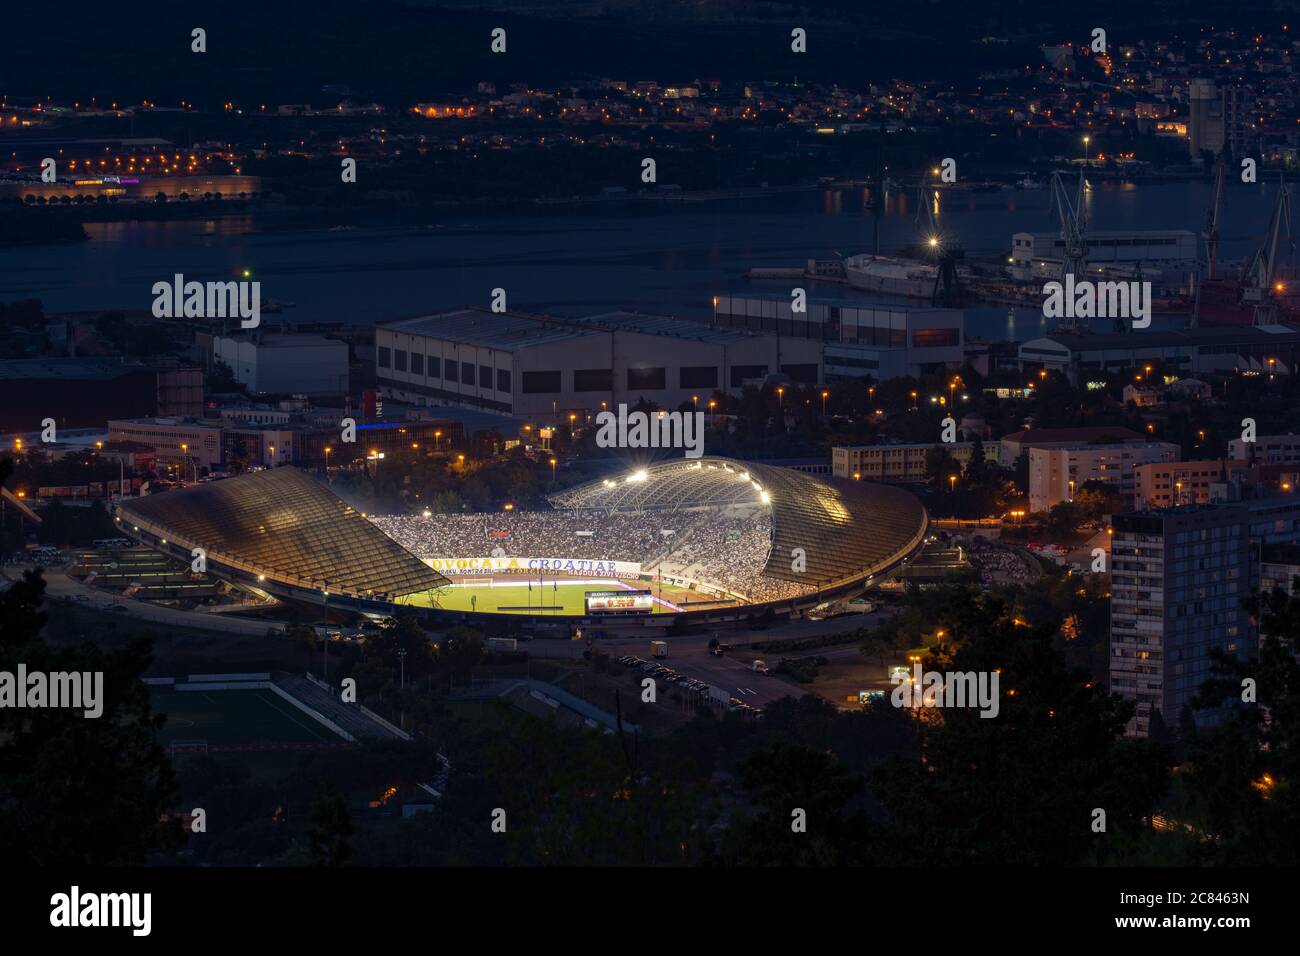 Hajduk Split Poljud stadium aerial view Coffee Mug by Brch Photography -  Fine Art America